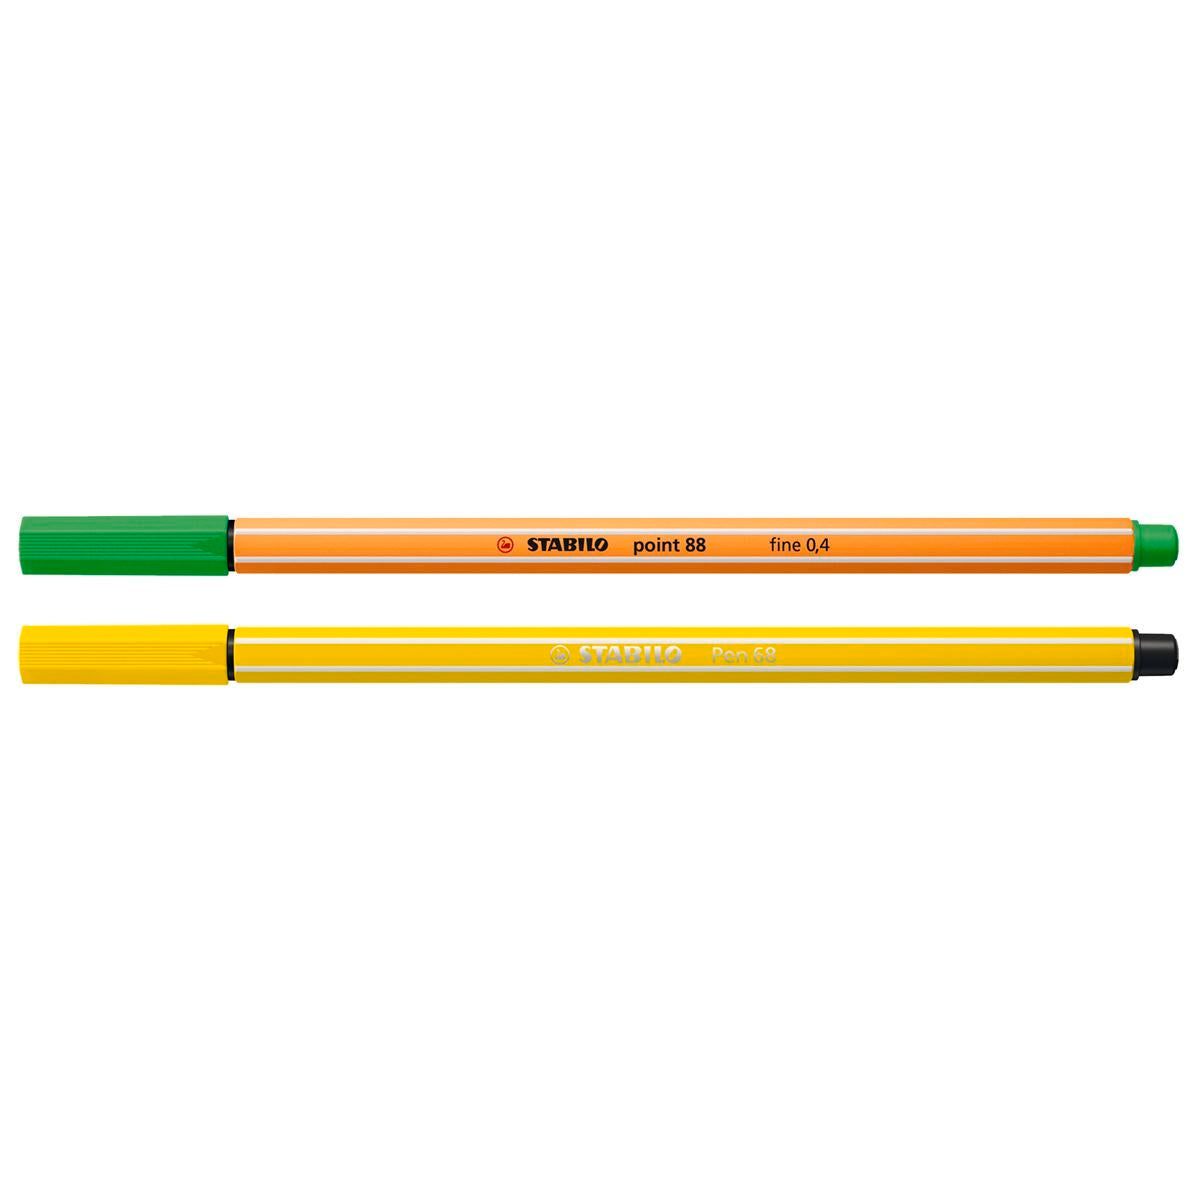 STABILO ARTY Assorted Set - Premium Felt Tip Pen & Fineliner, Stabilo Pen 68 & Point 88 - Pack of 68